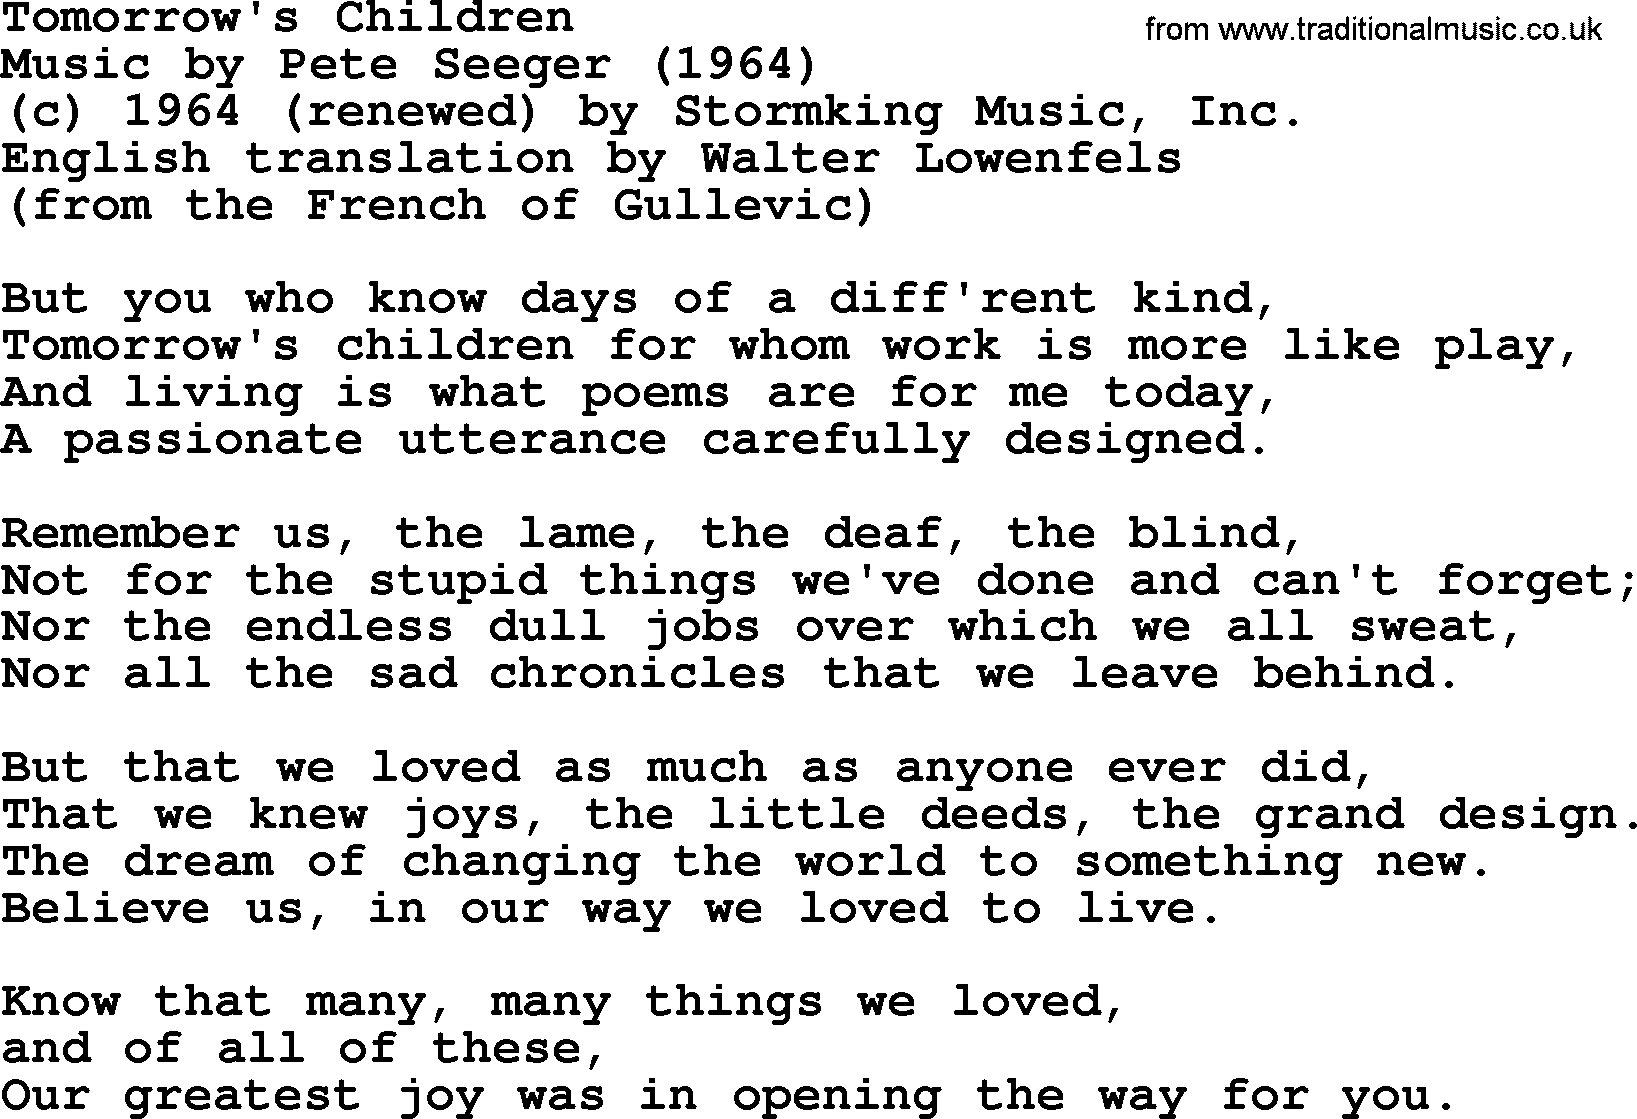 Pete Seeger song Tomorrow's Children-Pete-Seeger.txt lyrics